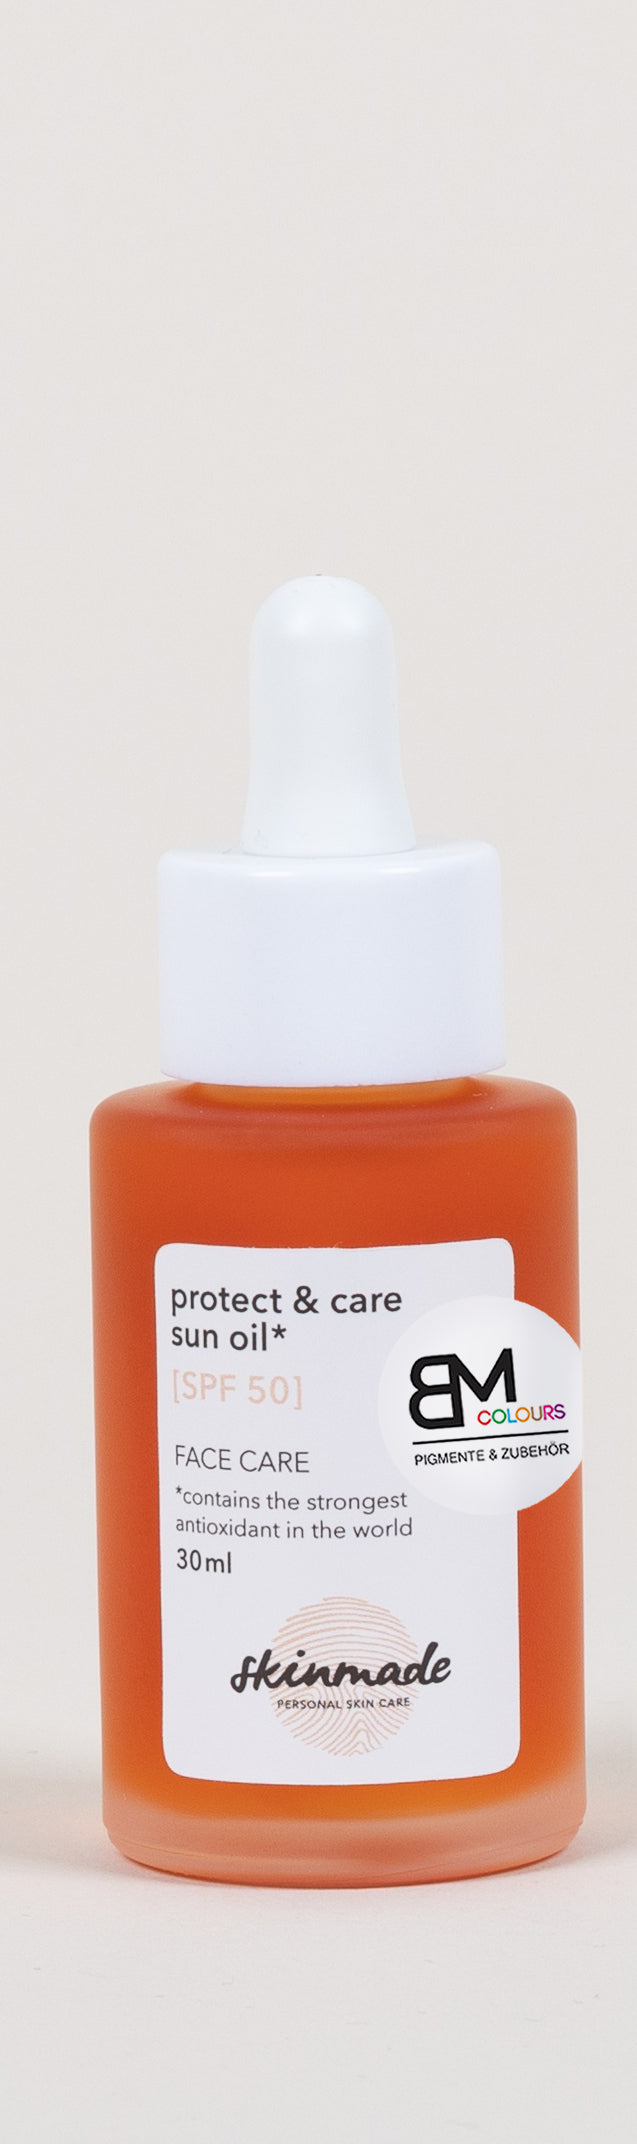 Aceite solar SPF 50 - BM colours de Skinmade